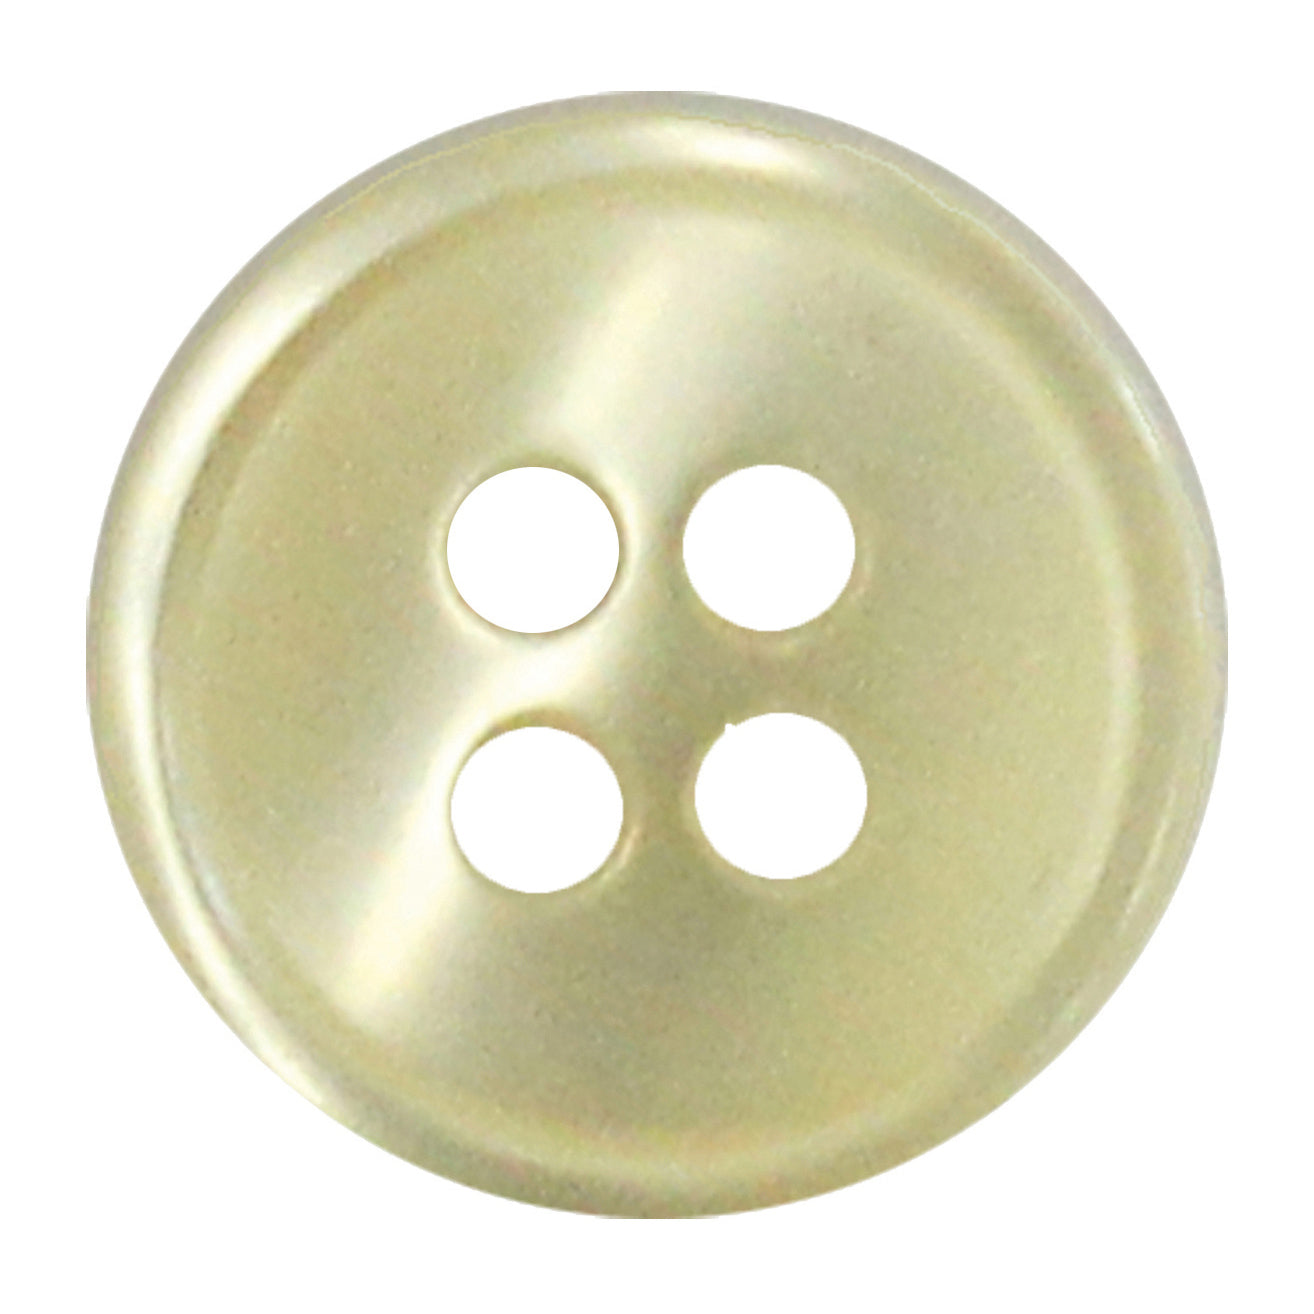 4 Hole Button - 13mm - Light Yellow [LD27.5]